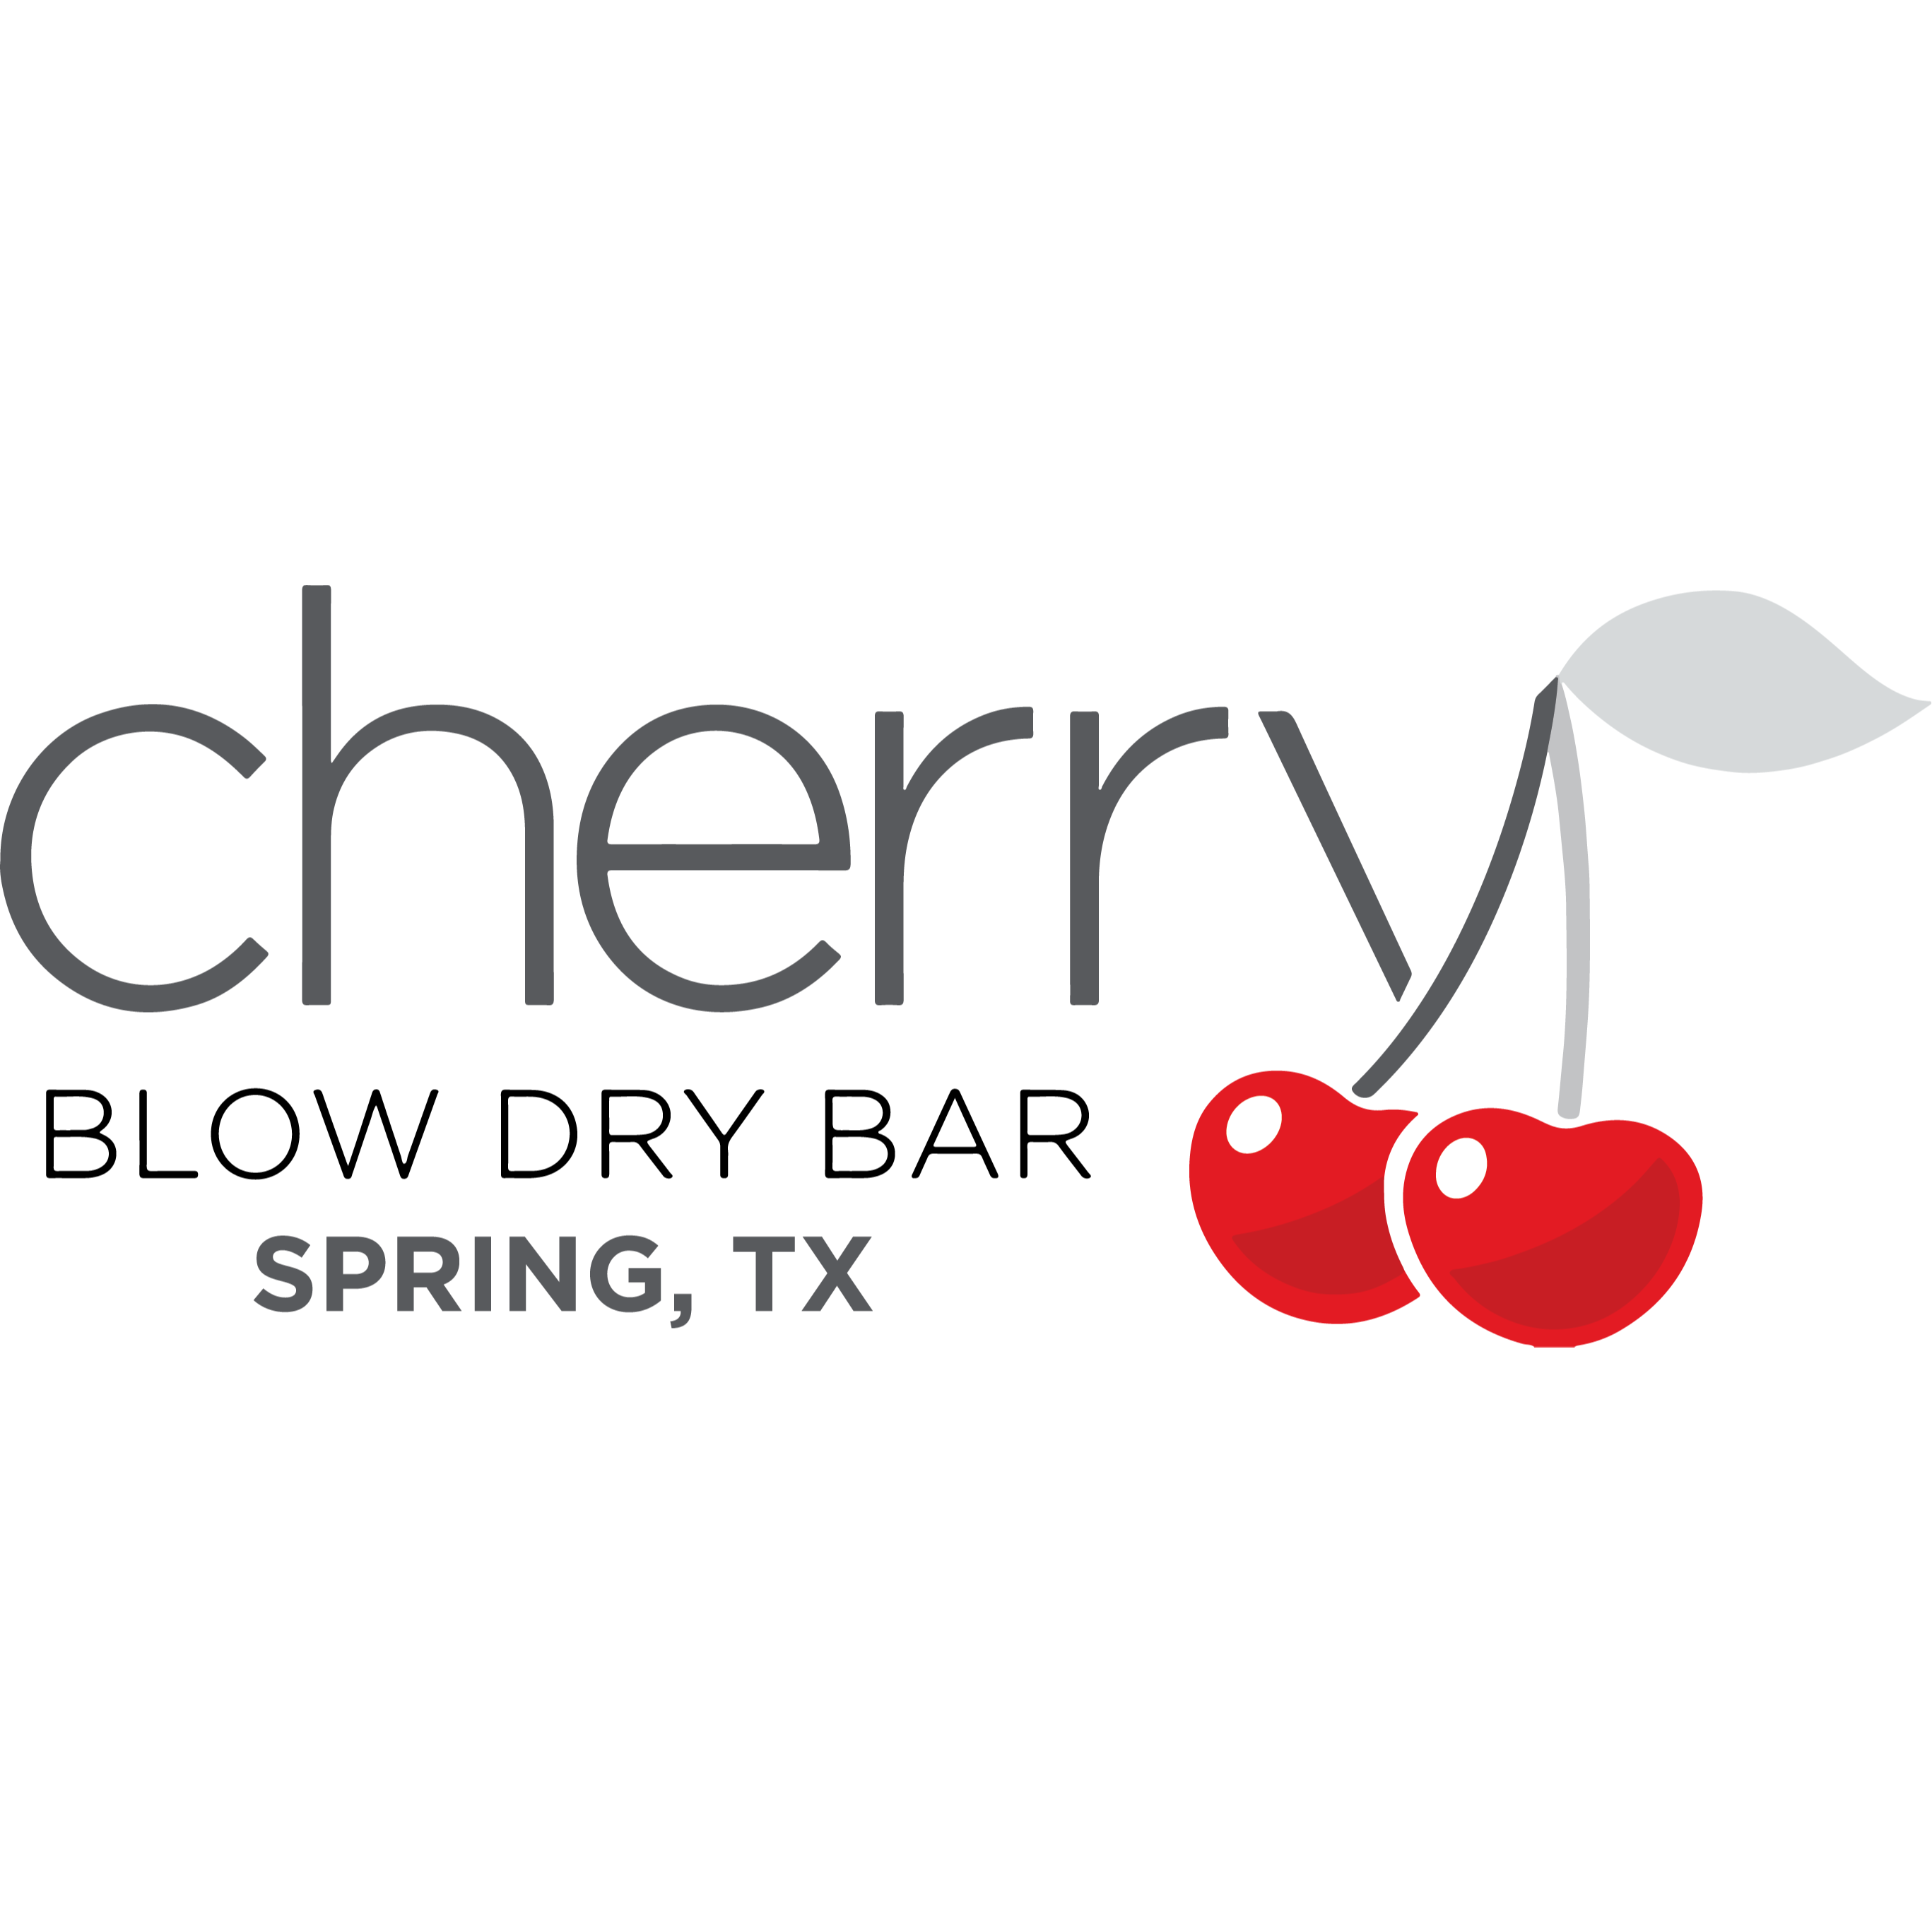 Cherry Blow Dry Bar Spring